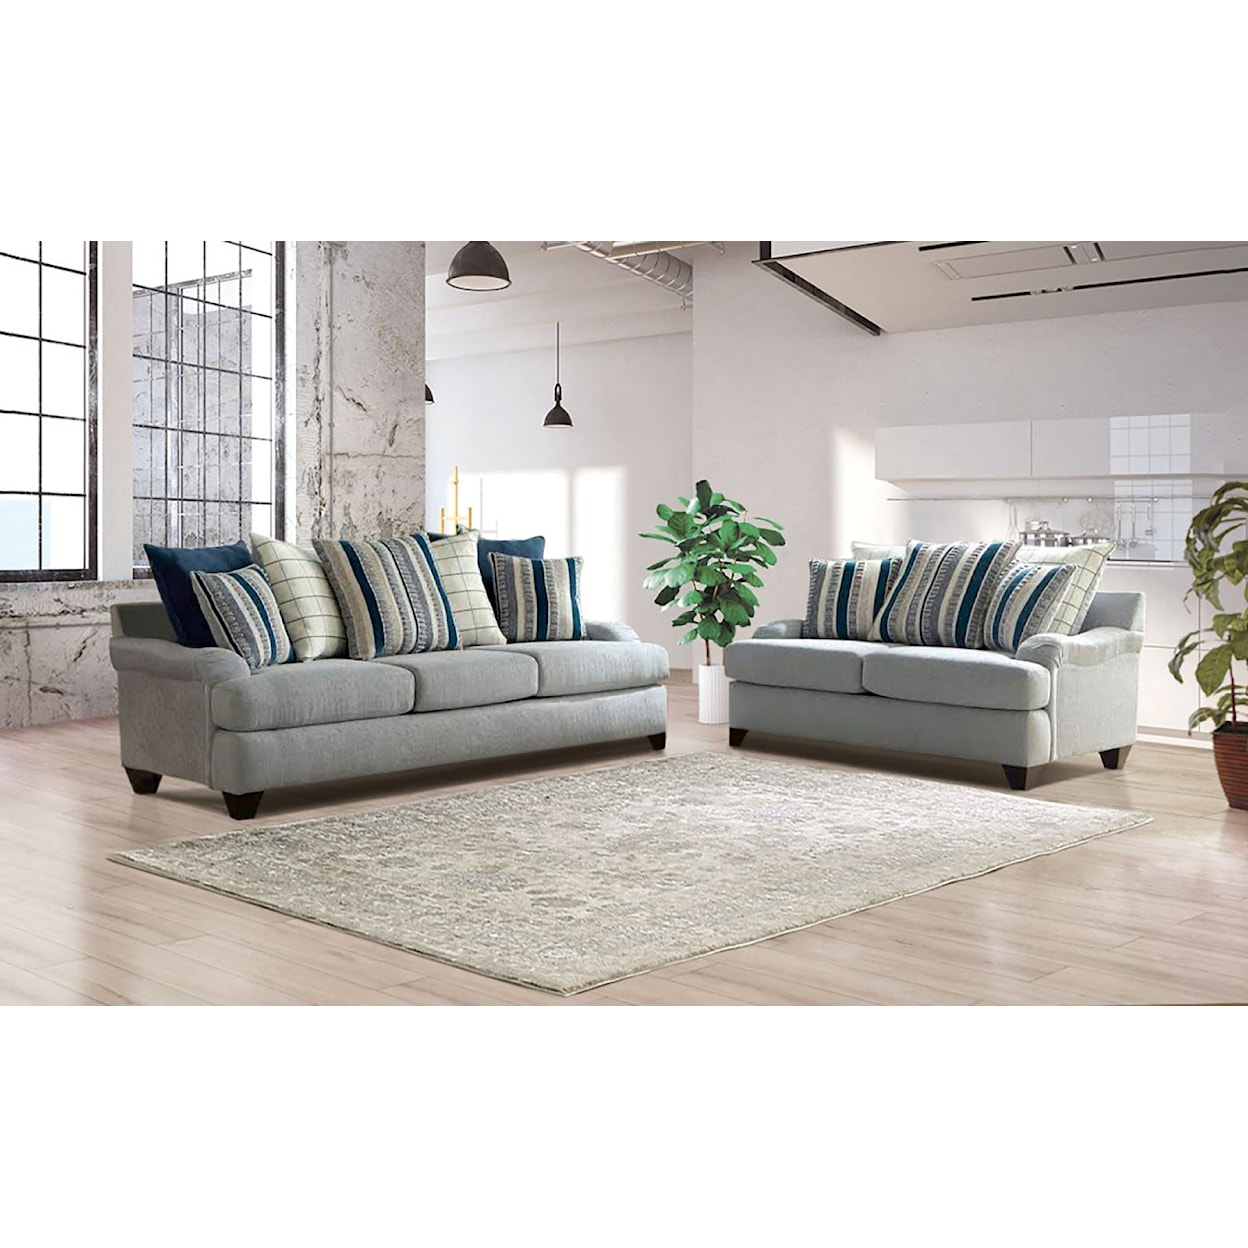 Furniture of America Plaistow Sofa and Living Room Set